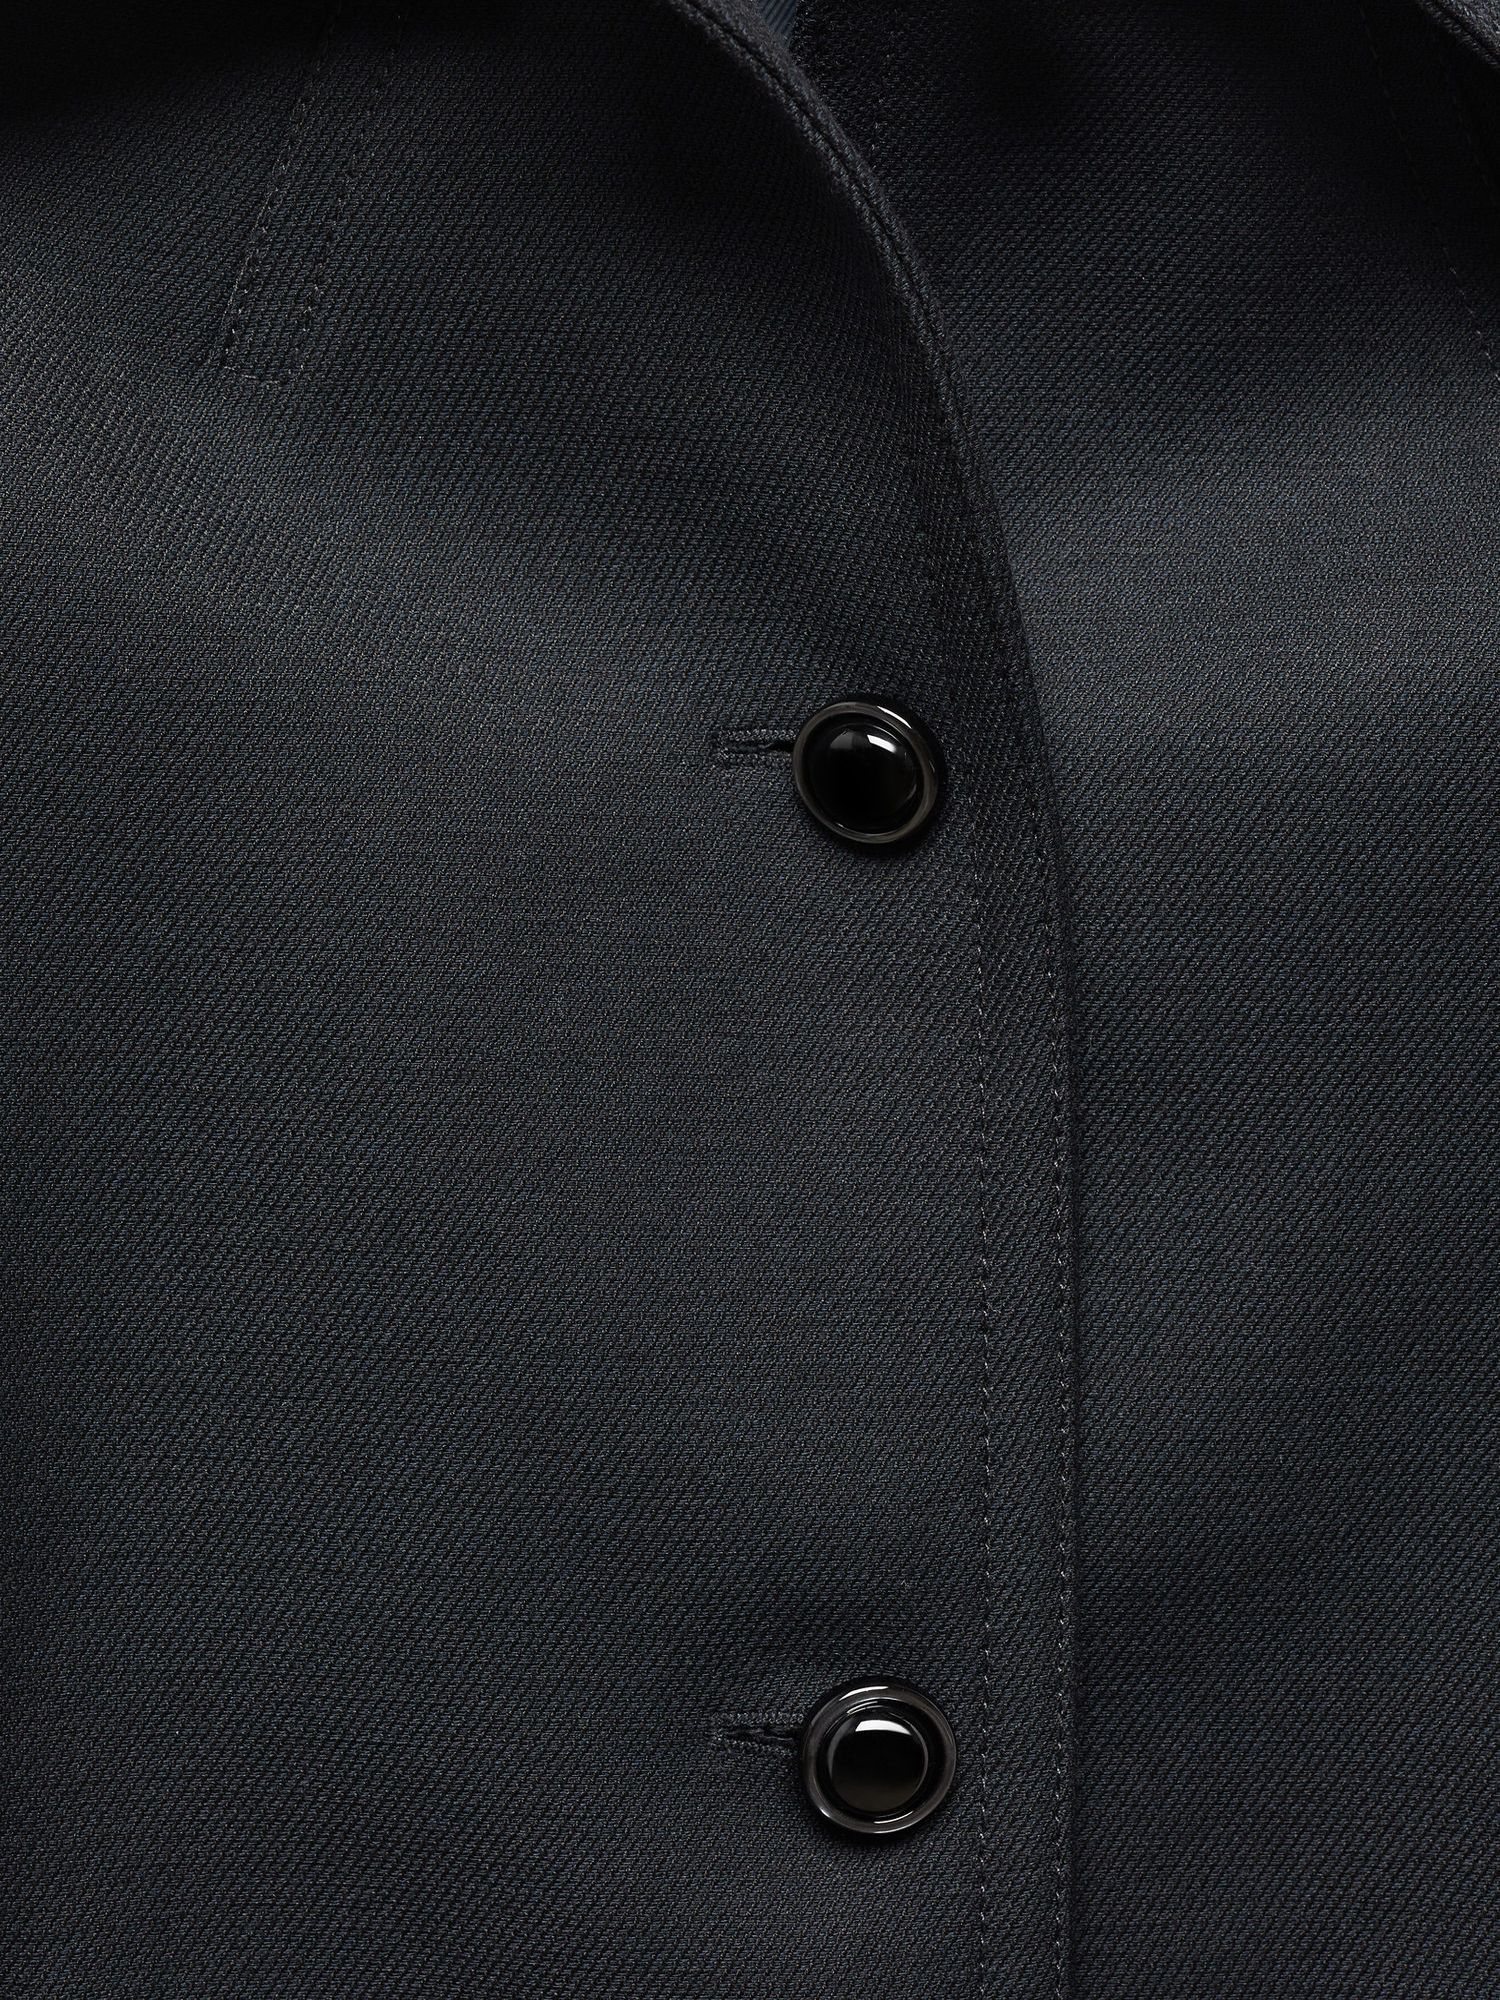 Mango Lively Shirt Collar Button Coat, Navy at John Lewis & Partners